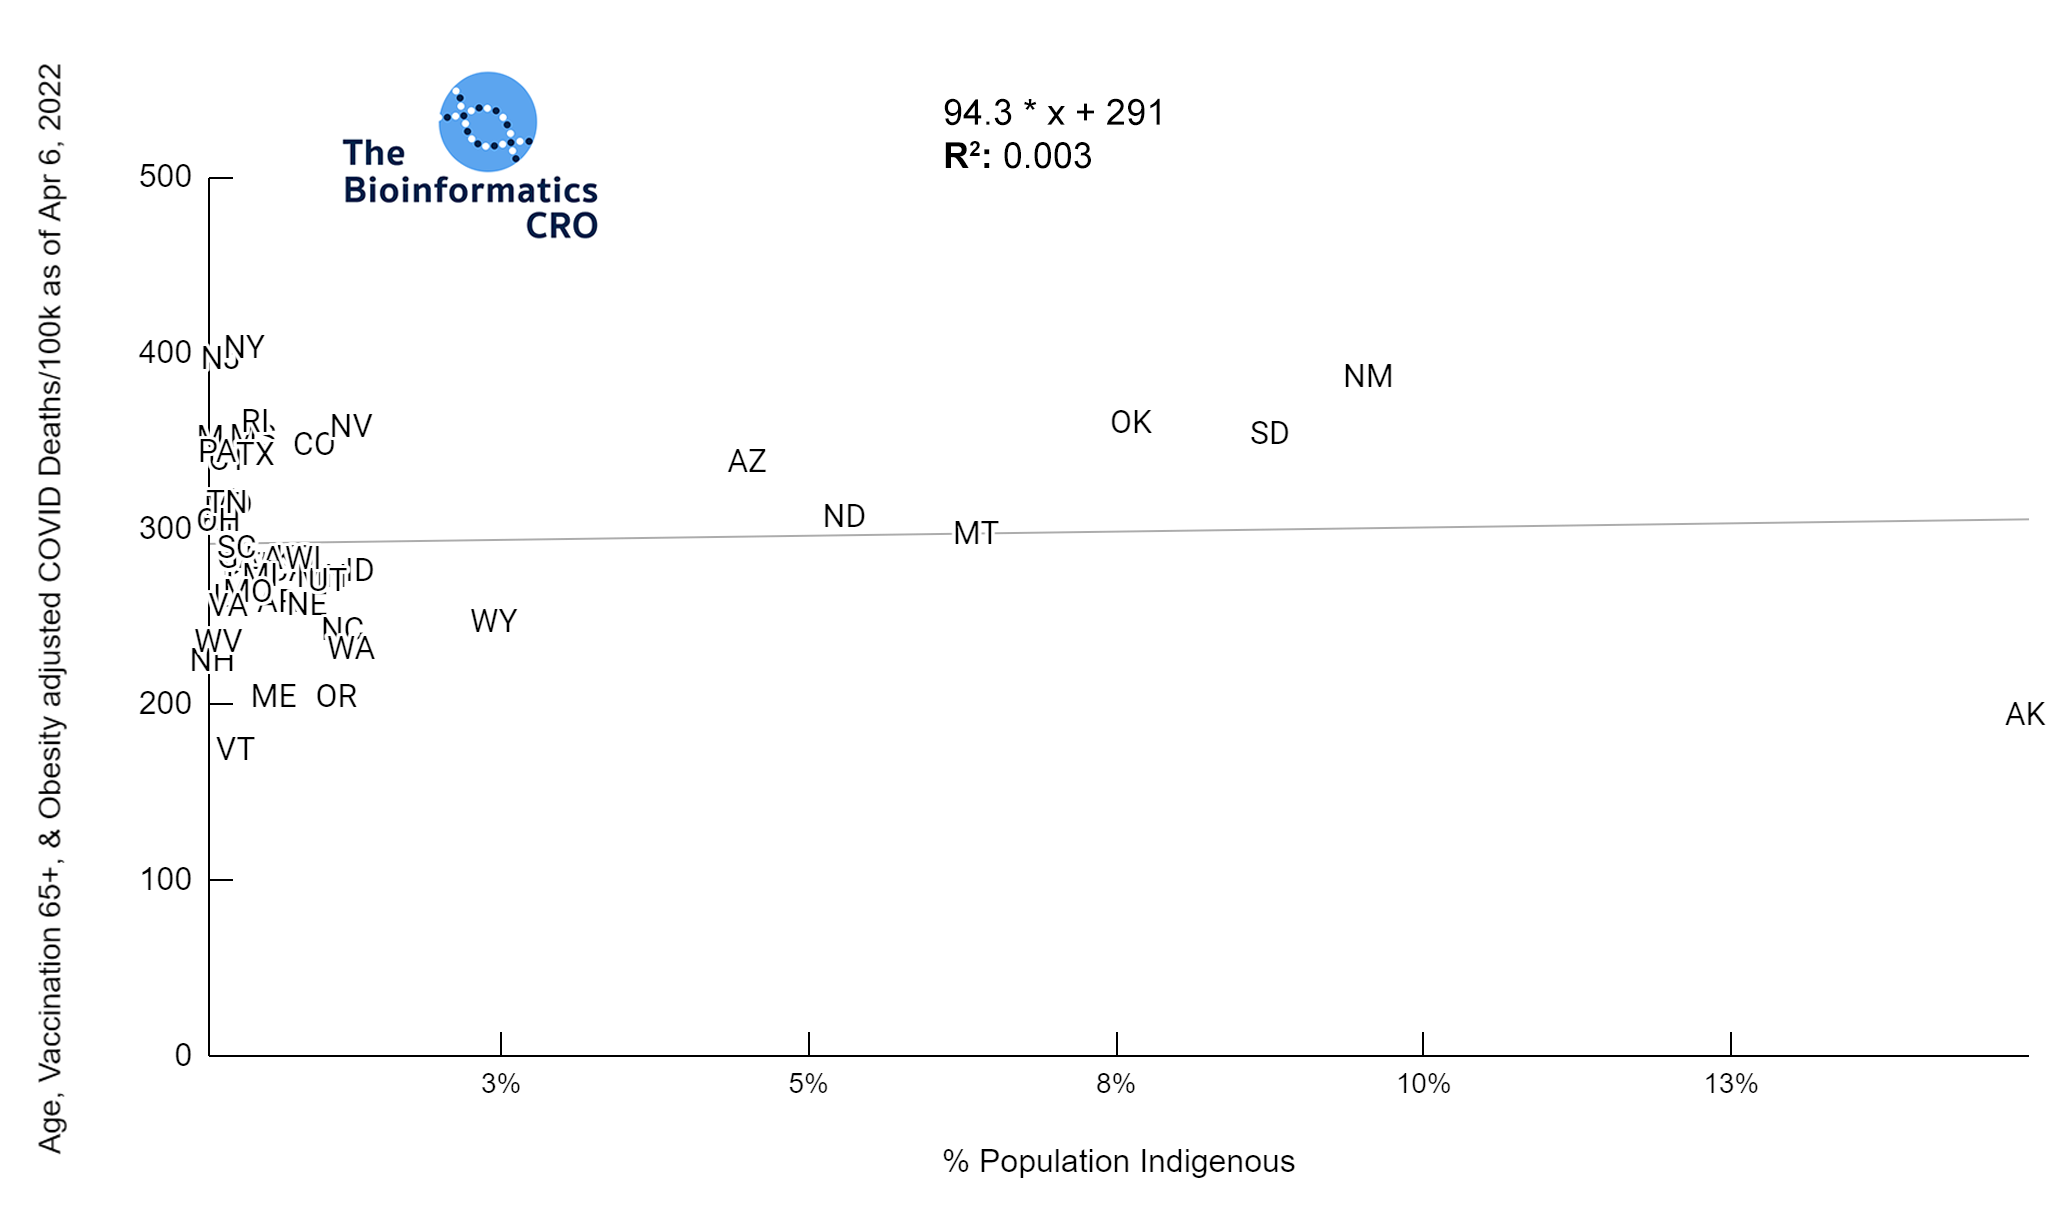 % Population Indigenous versus Age-adjusted deaths | y = 94.3 * x + 291 | R^2 = 0.003